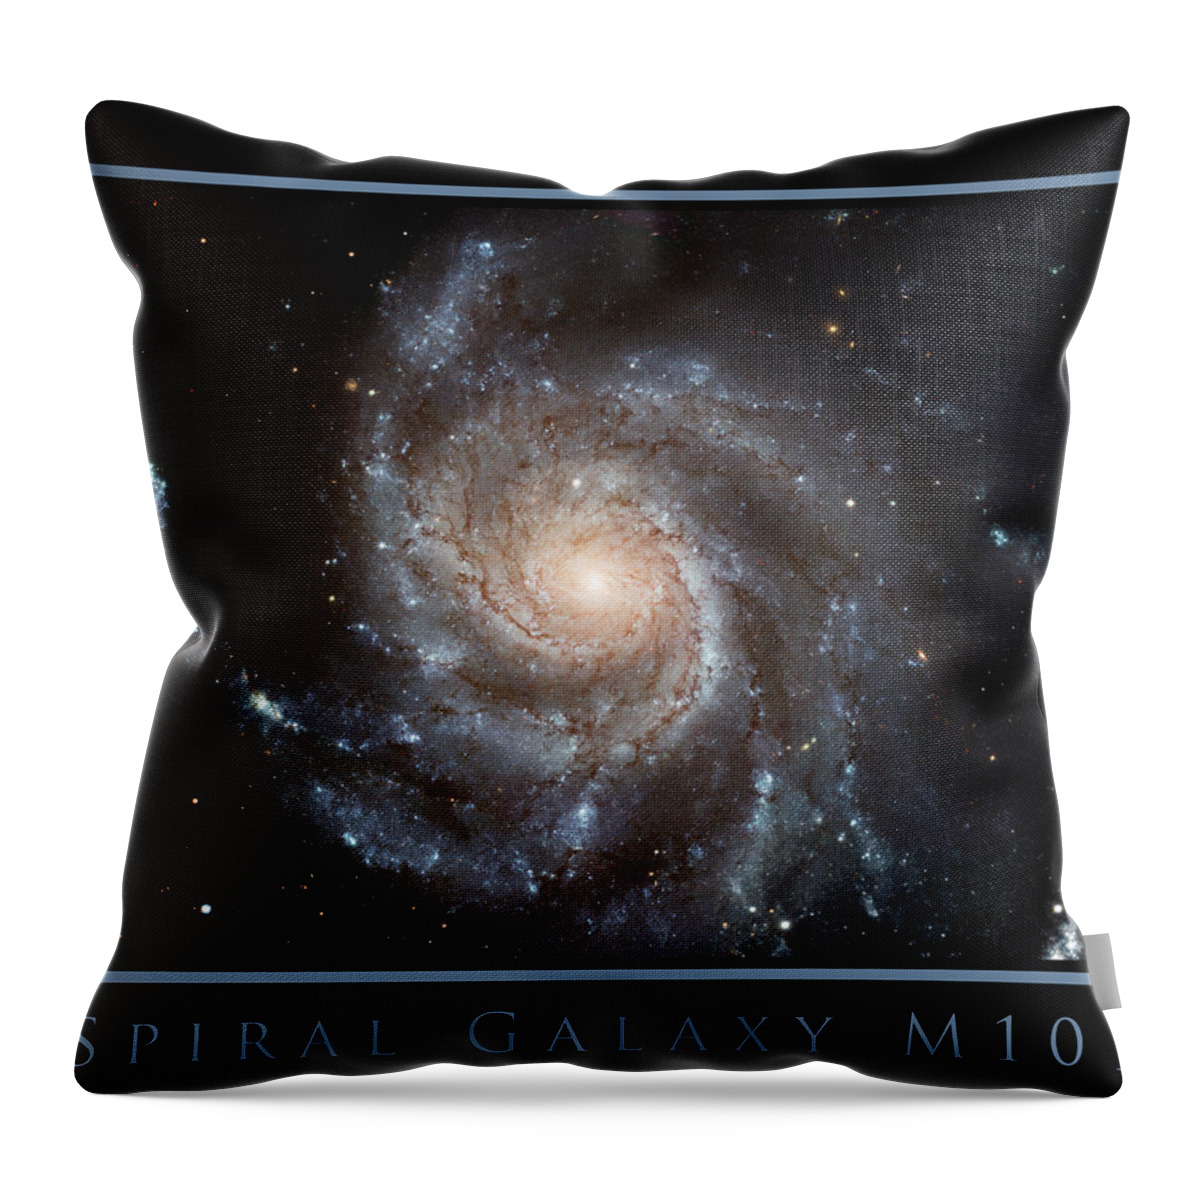 Spiral Galaxy Throw Pillow featuring the photograph Spiral Galaxy M101 by Adam Mateo Fierro